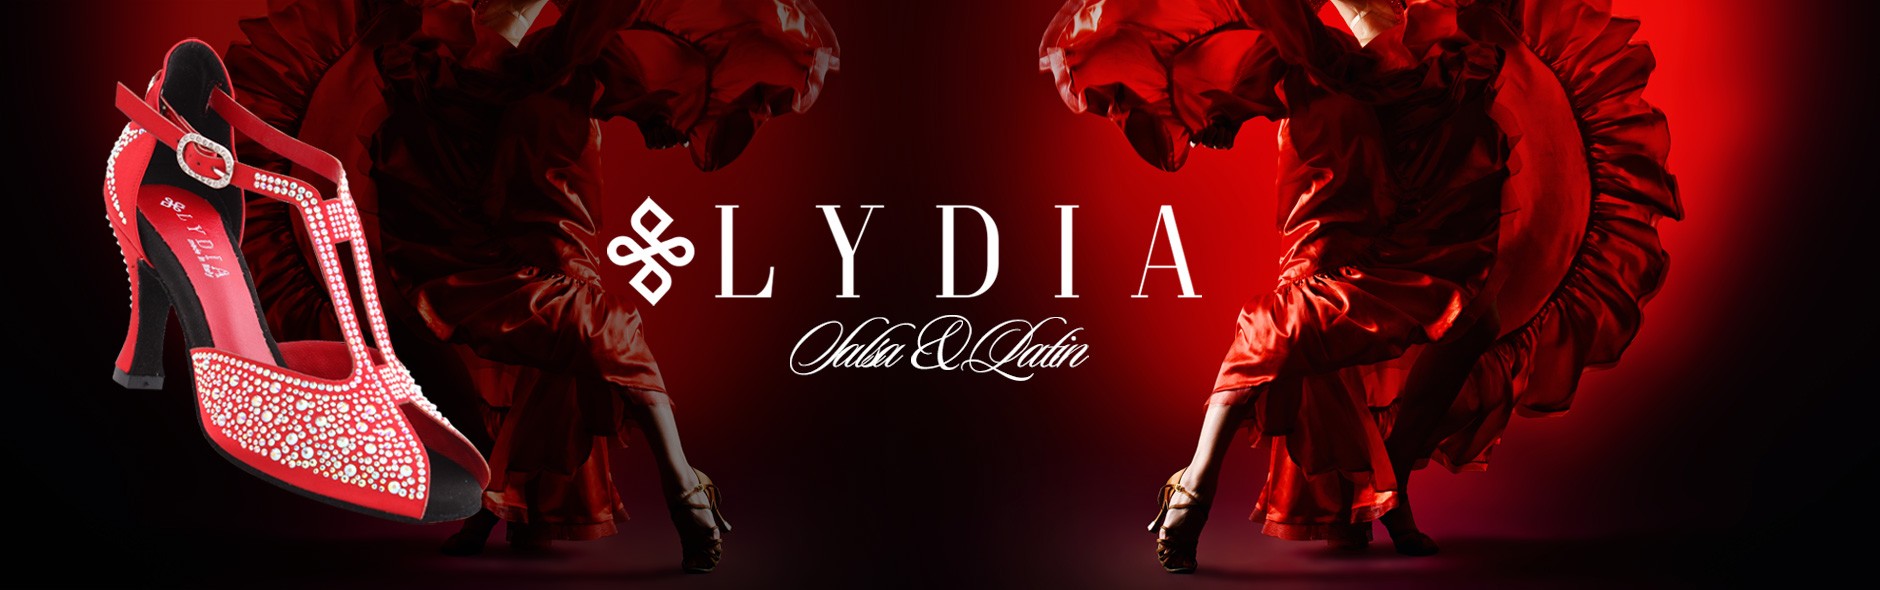 Predstavljamo Vam Lydia! Fascinirajte beskompromisno!